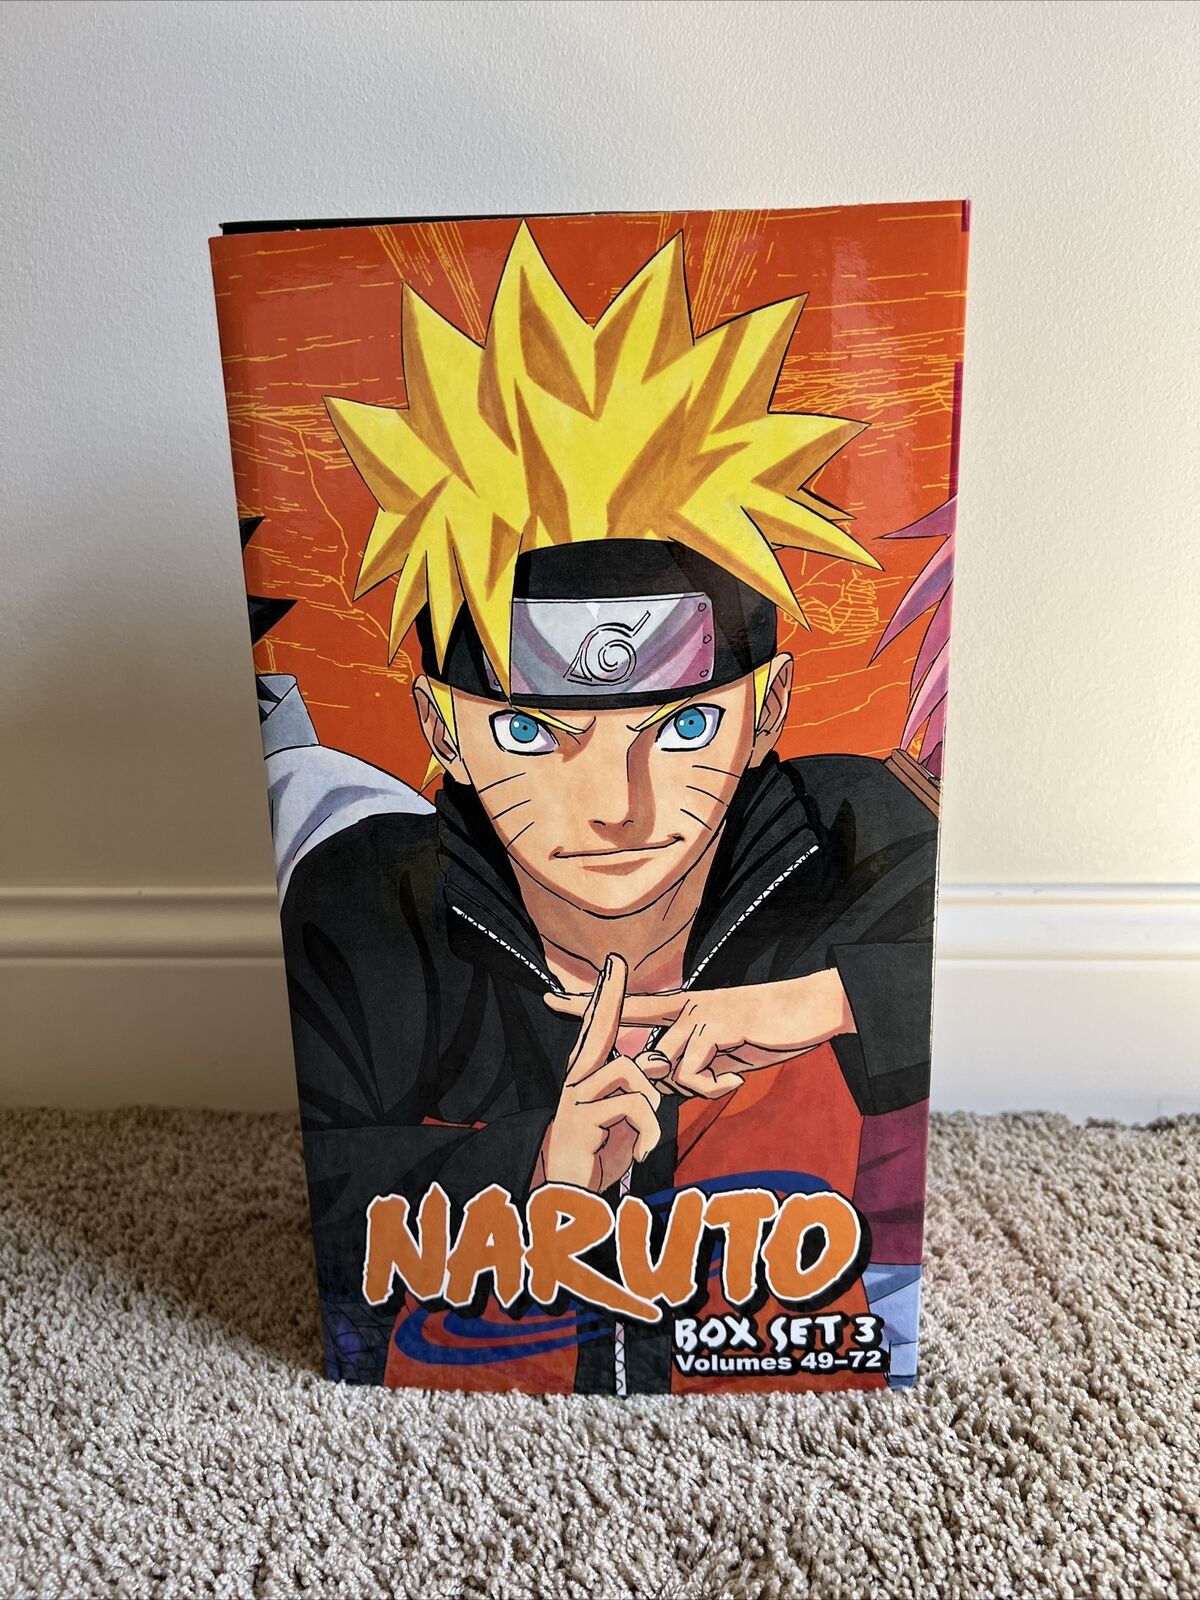 Naruto Box Set 3: Volumes 49-72 with Premium Manga